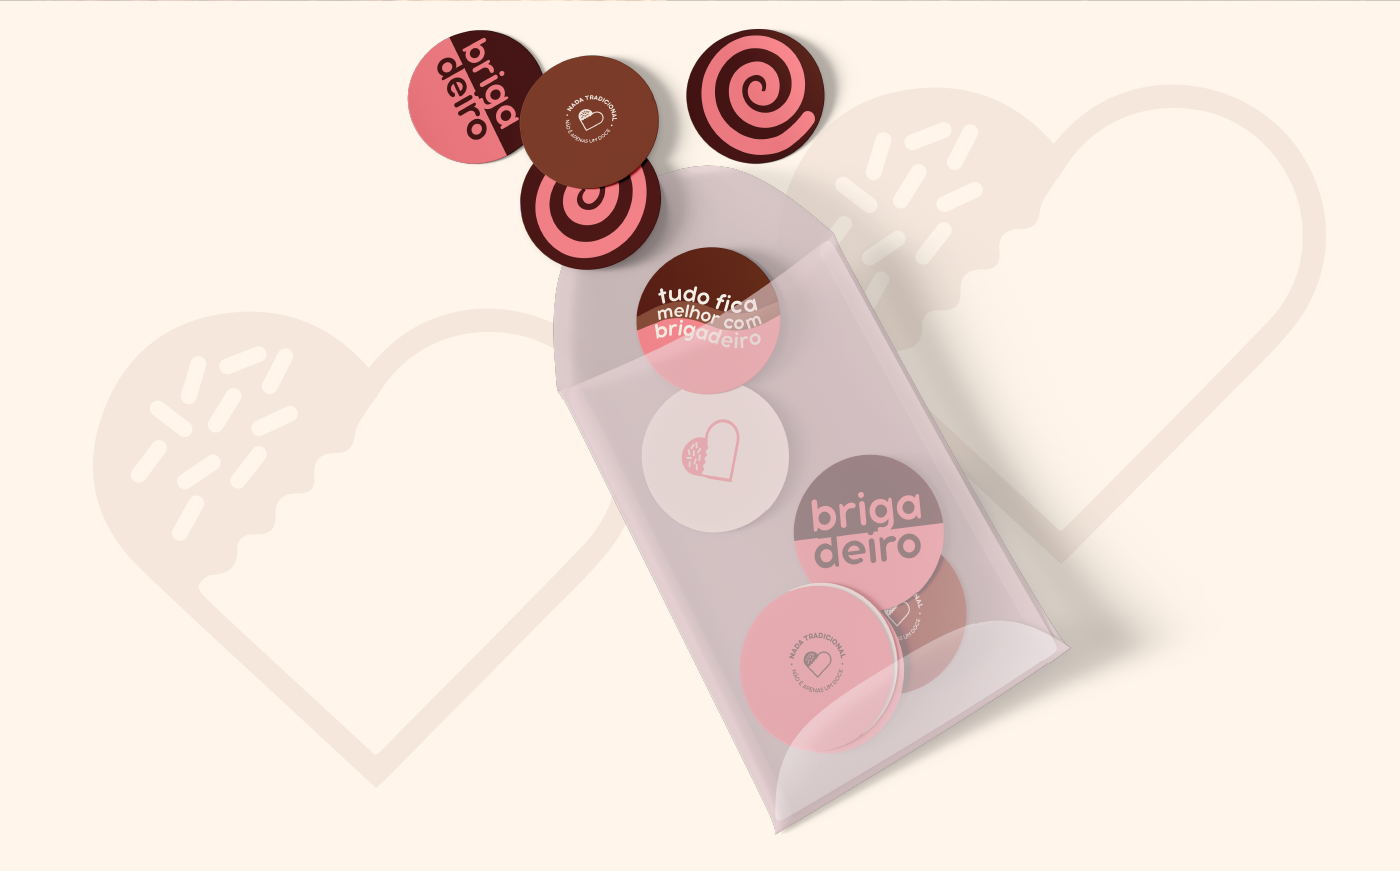 brigadeiro doces identidade visual Logotipo visual identity chocolate Candy pink logo adobe illustrator